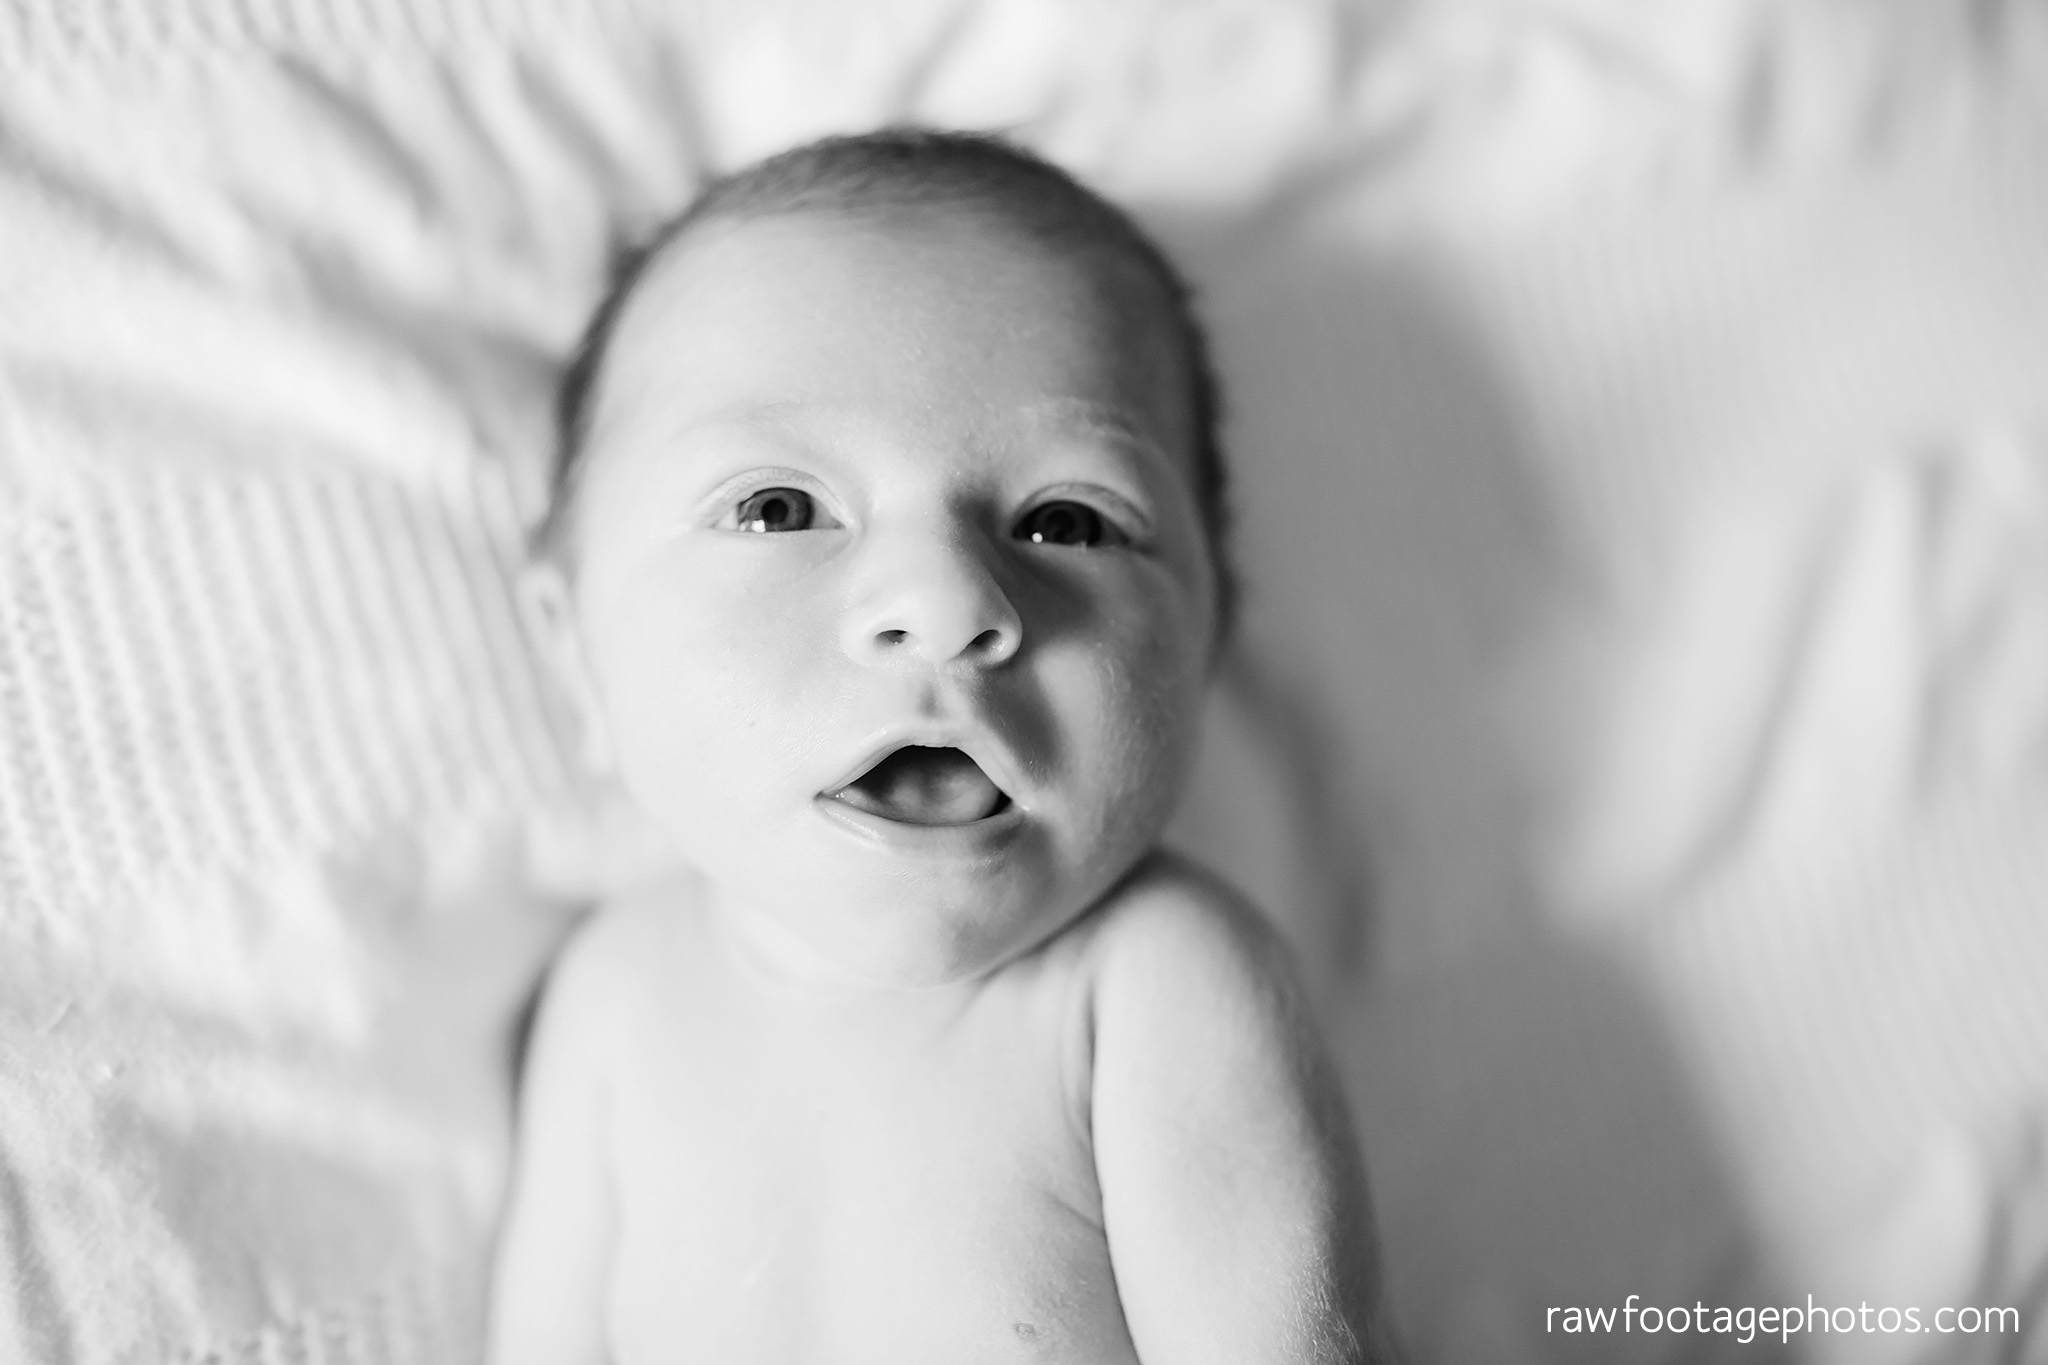 london_ontario_newborn_photographer-newborn_lifestyle_photography-baby_boy-raw_footage_photography038.jpg